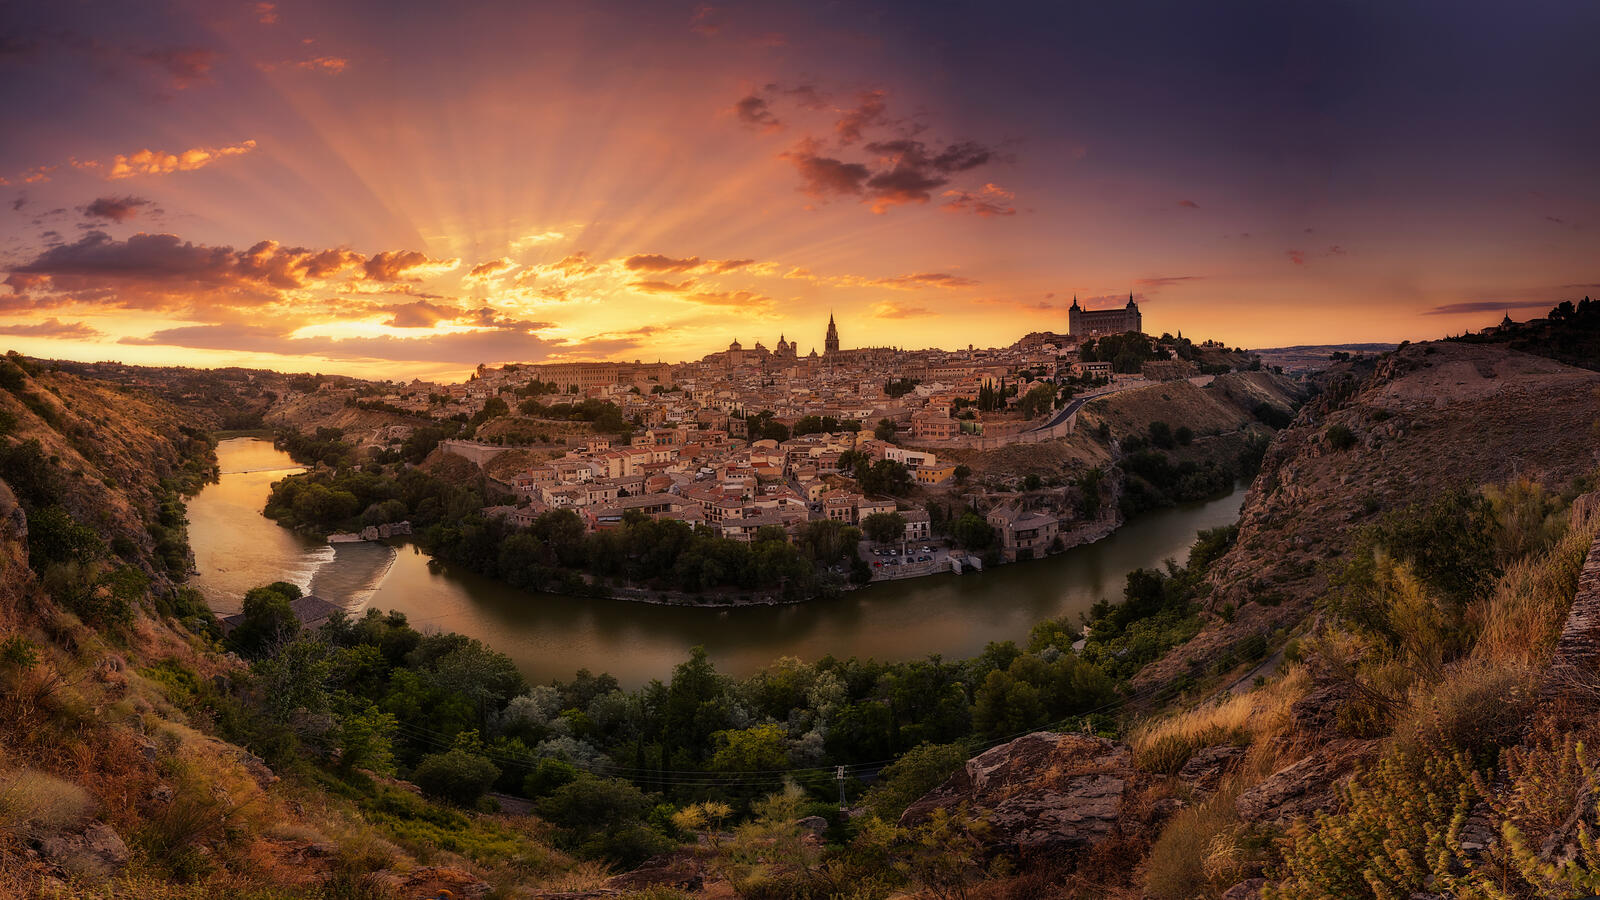 Обои Toledo Castile - La Mancha Spain на рабочий стол